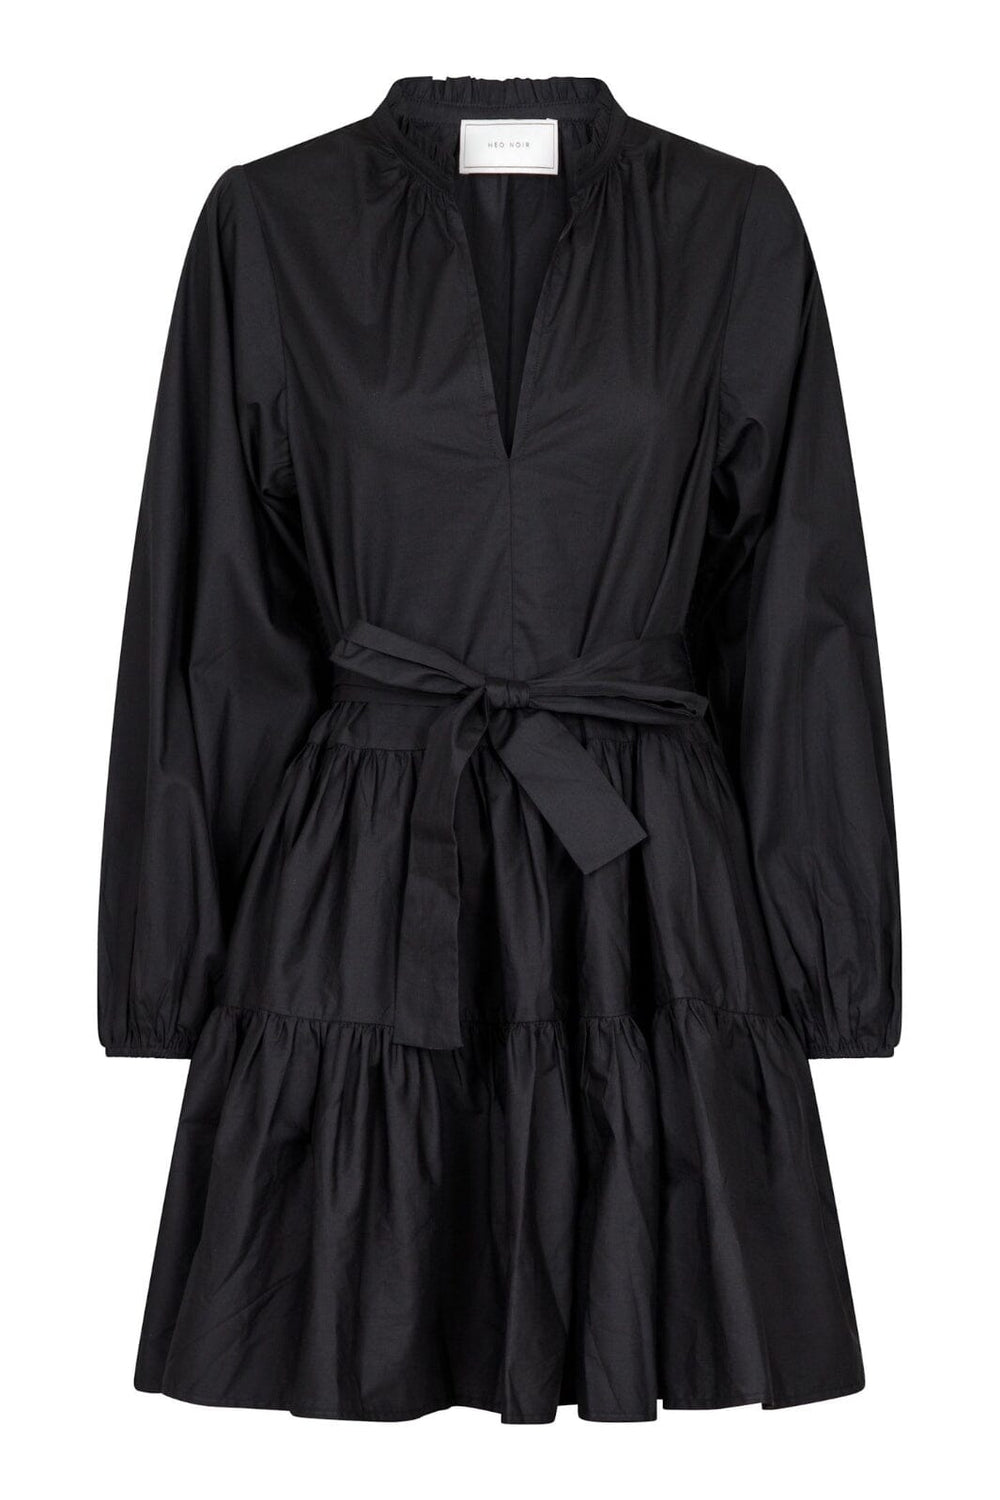 Neo Noir - Debbie Poplin Dress - Black Kjoler 